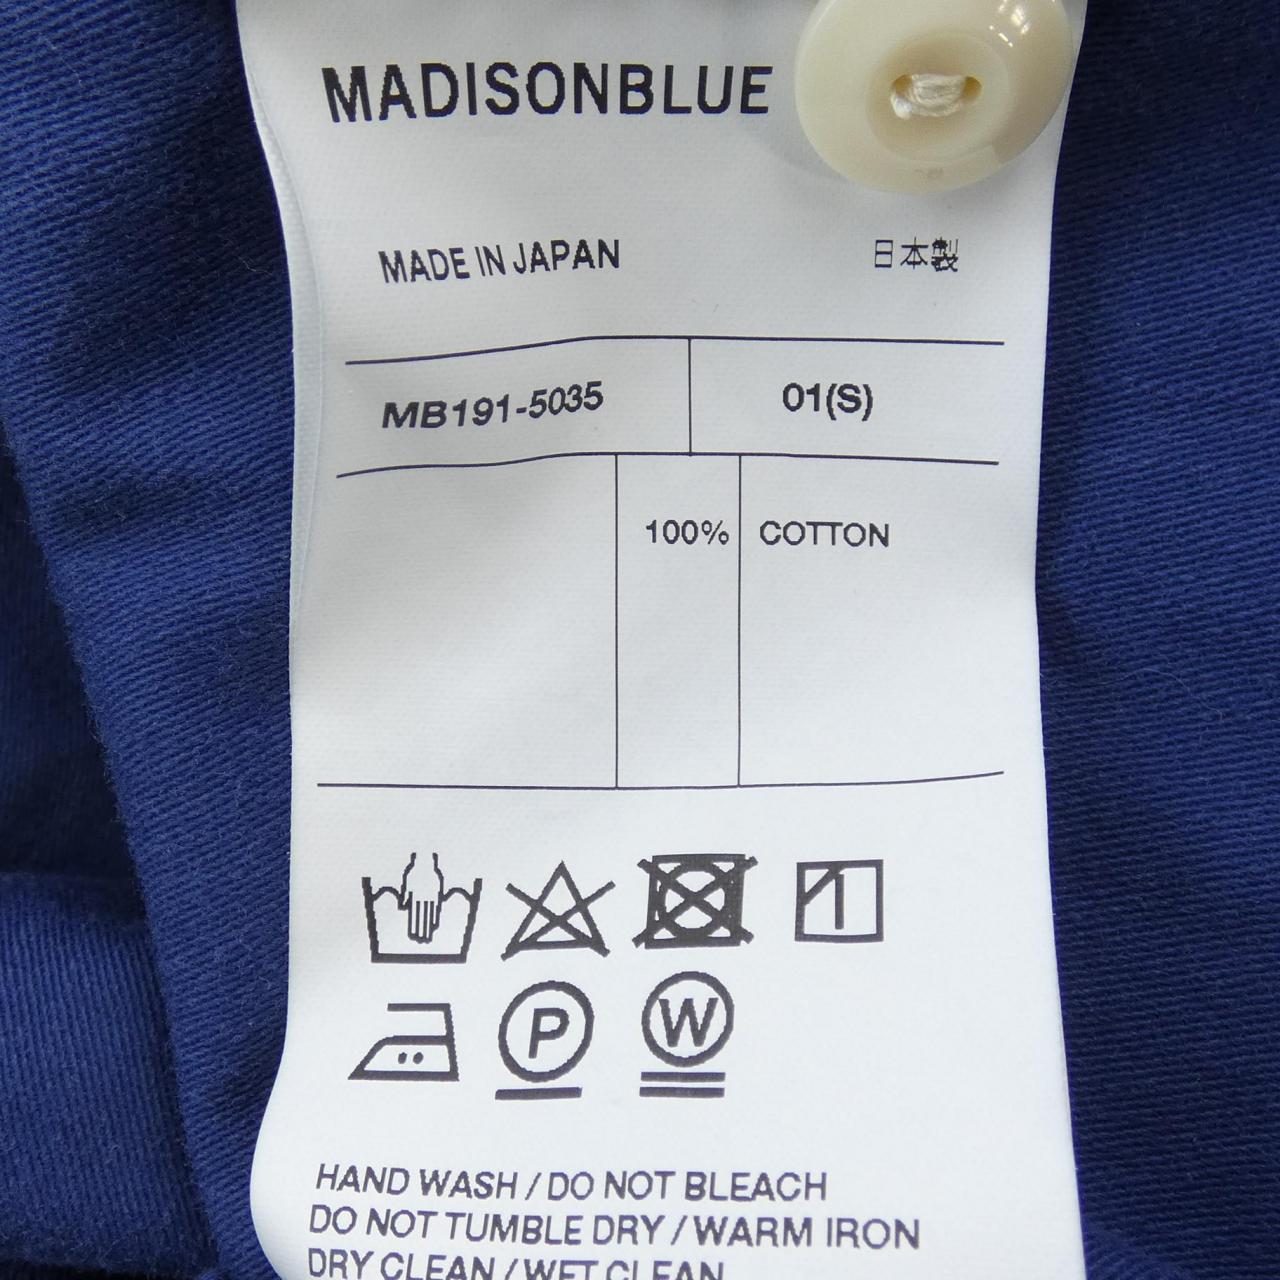 Madison Blue S/S shirt